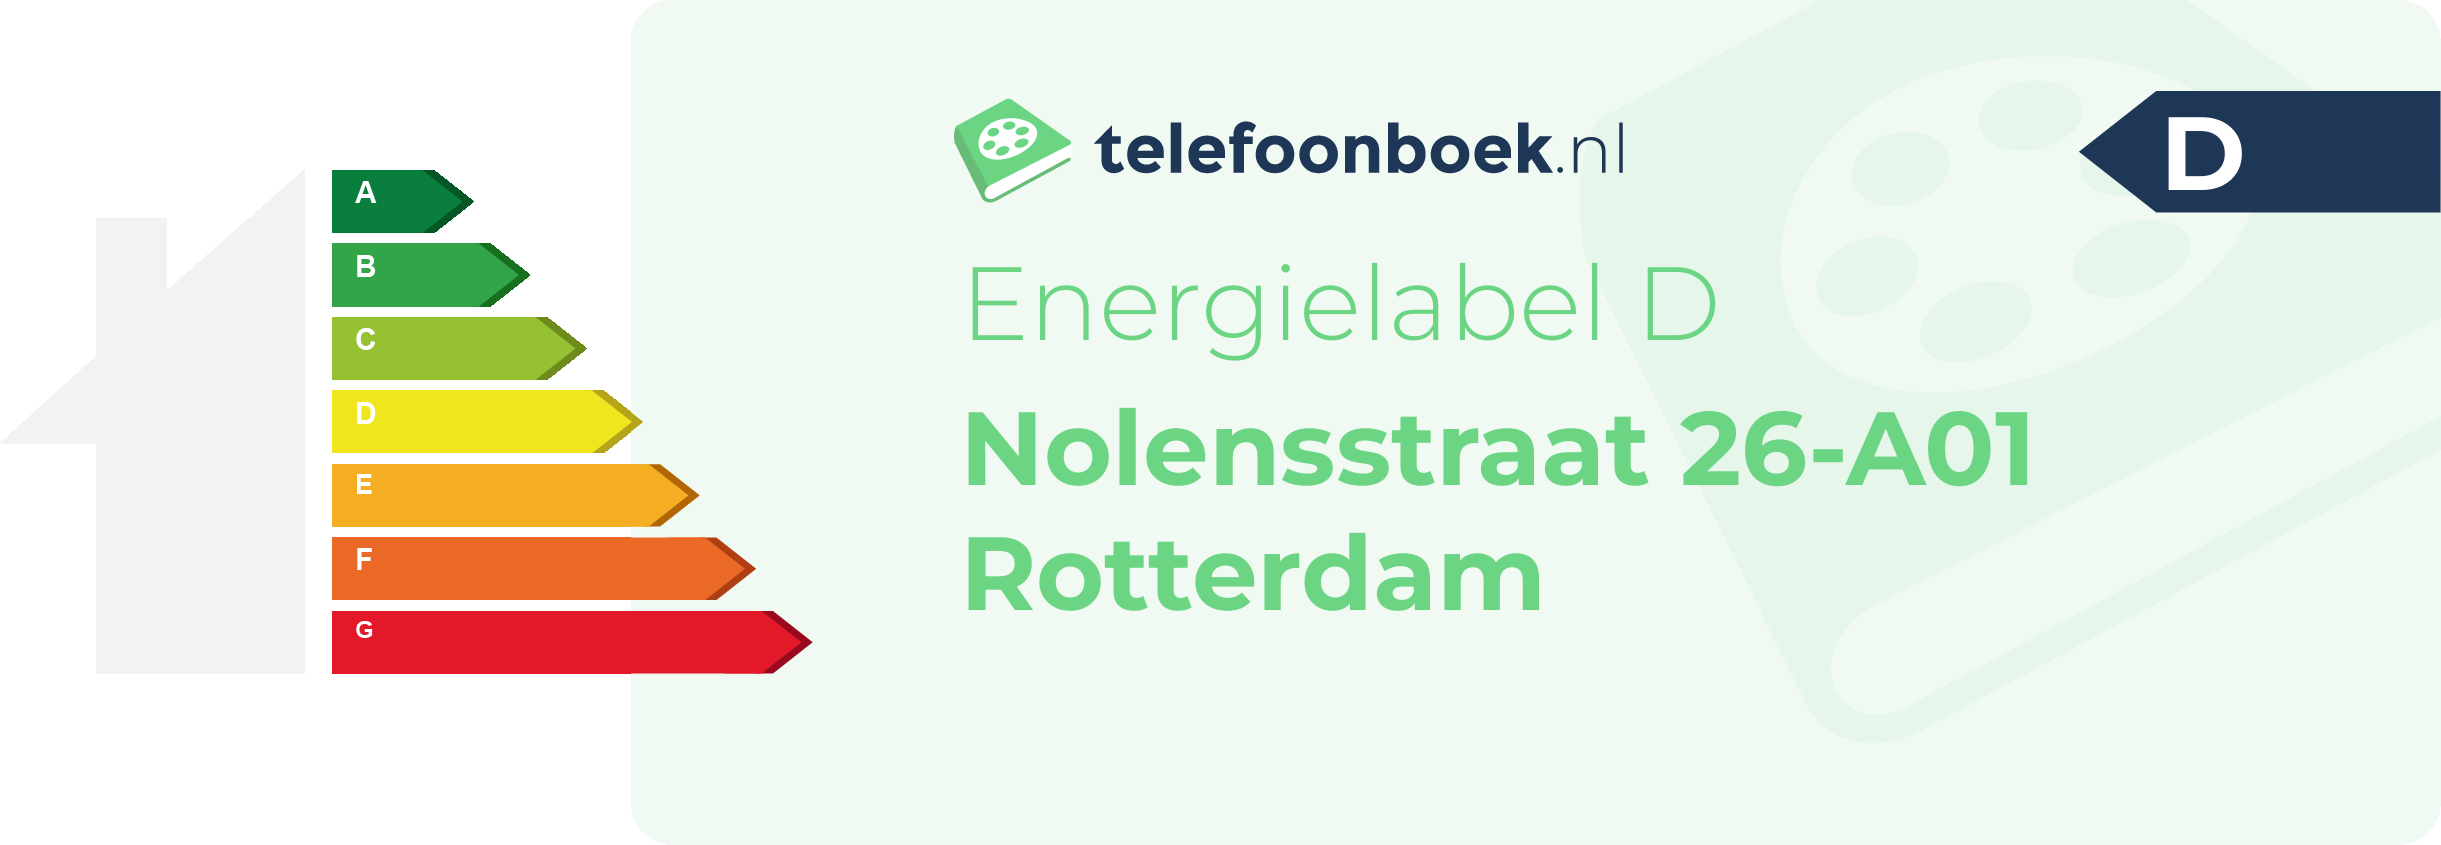 Energielabel Nolensstraat 26-A01 Rotterdam